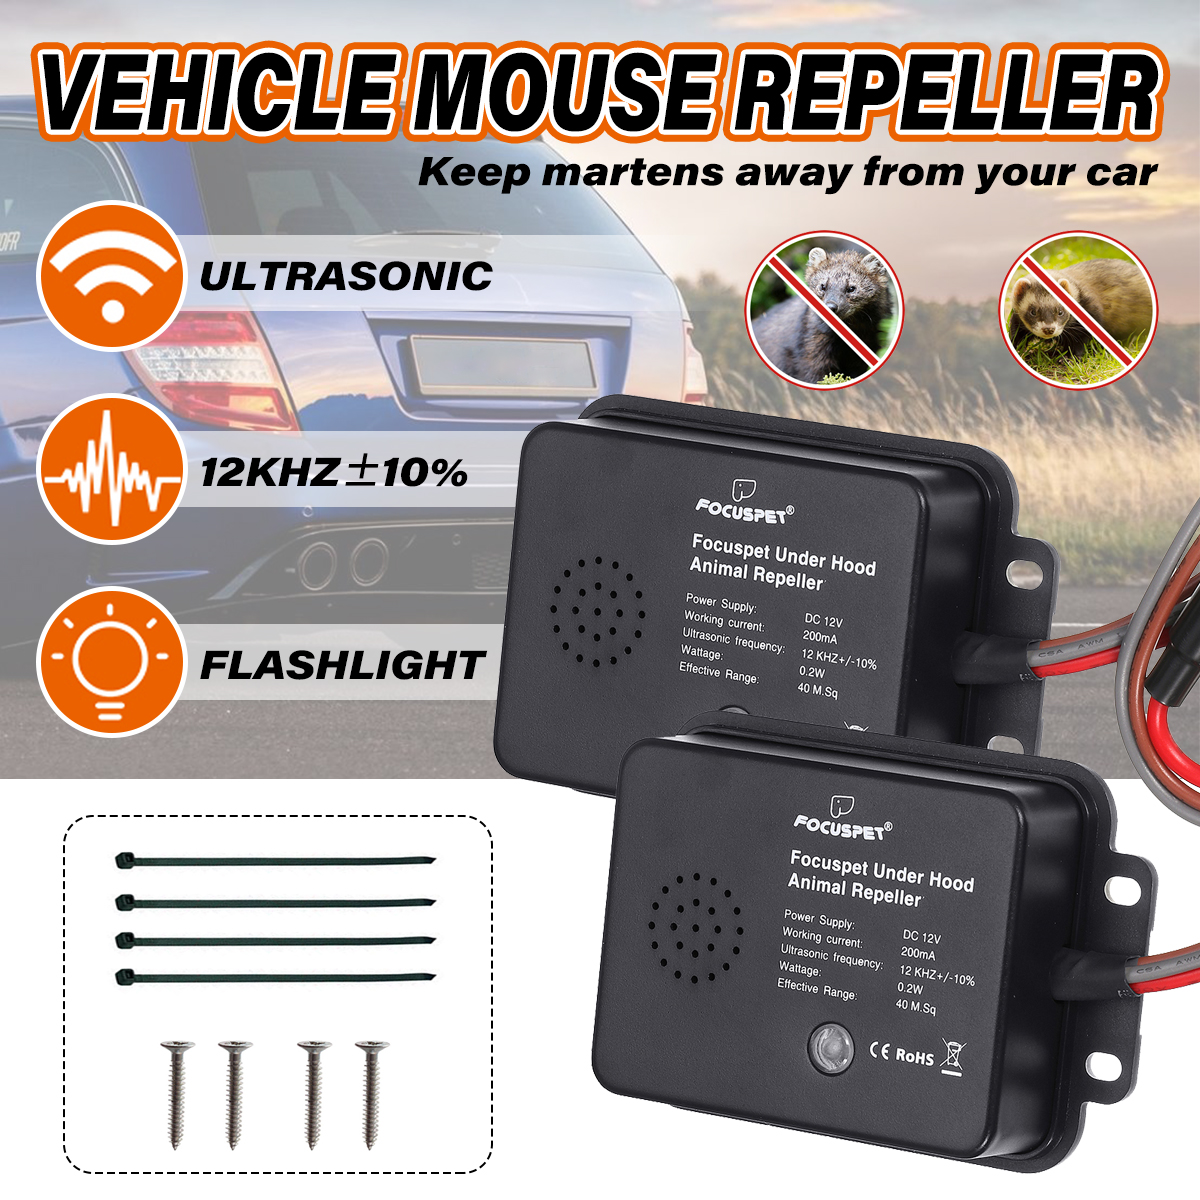 Focuspet-Ultrasonic-Mouse-Repeller-Garage-Car-Under-Hood-Rat-Rodent-Pest-Animal-Deterrent-1942198-1